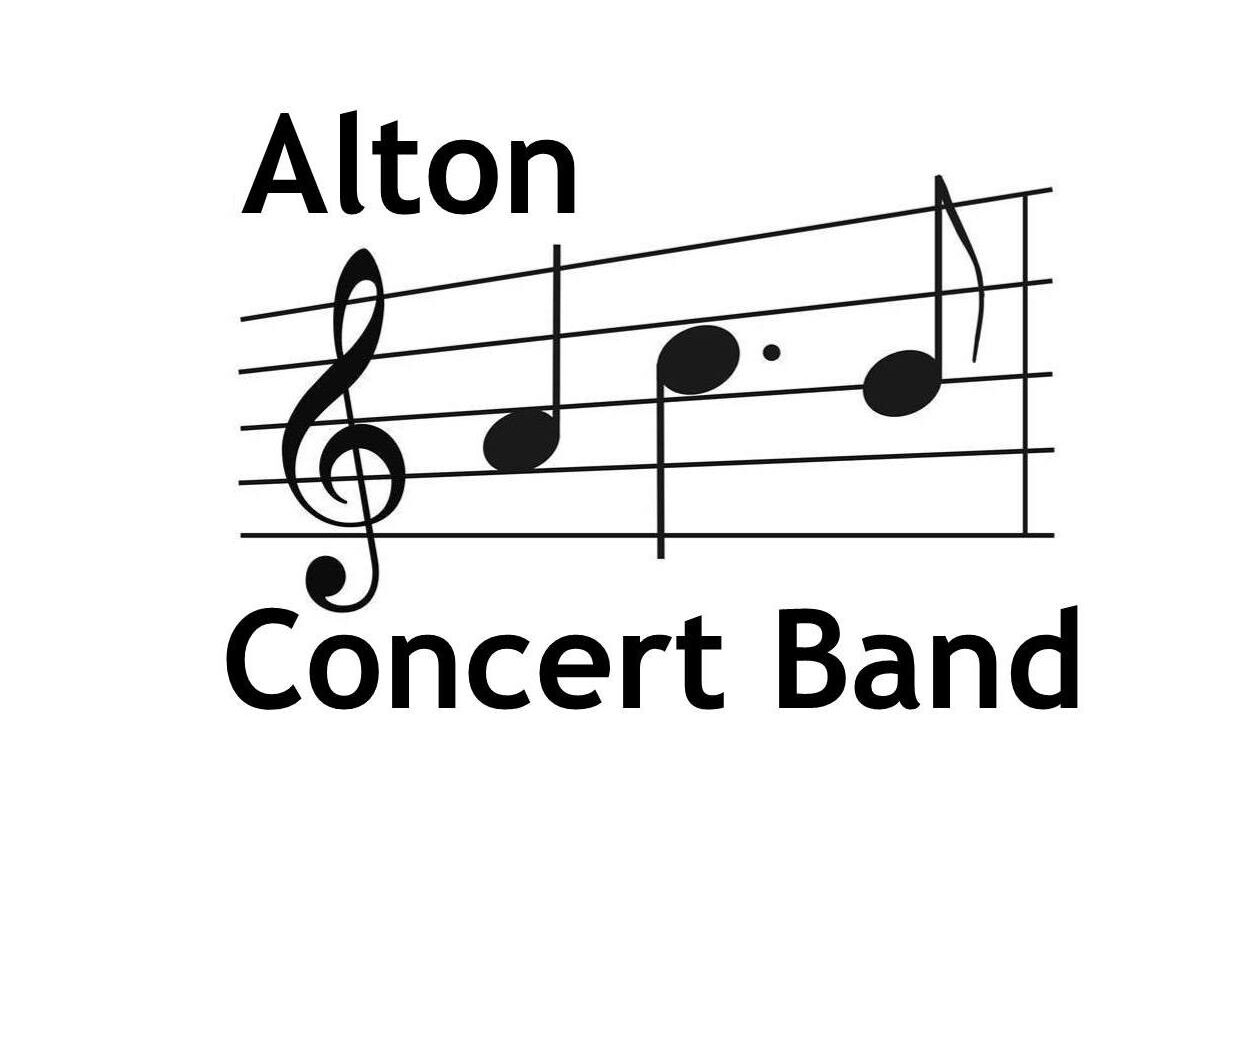 altonconcertband.co.uk :  Registered charity number XT31167